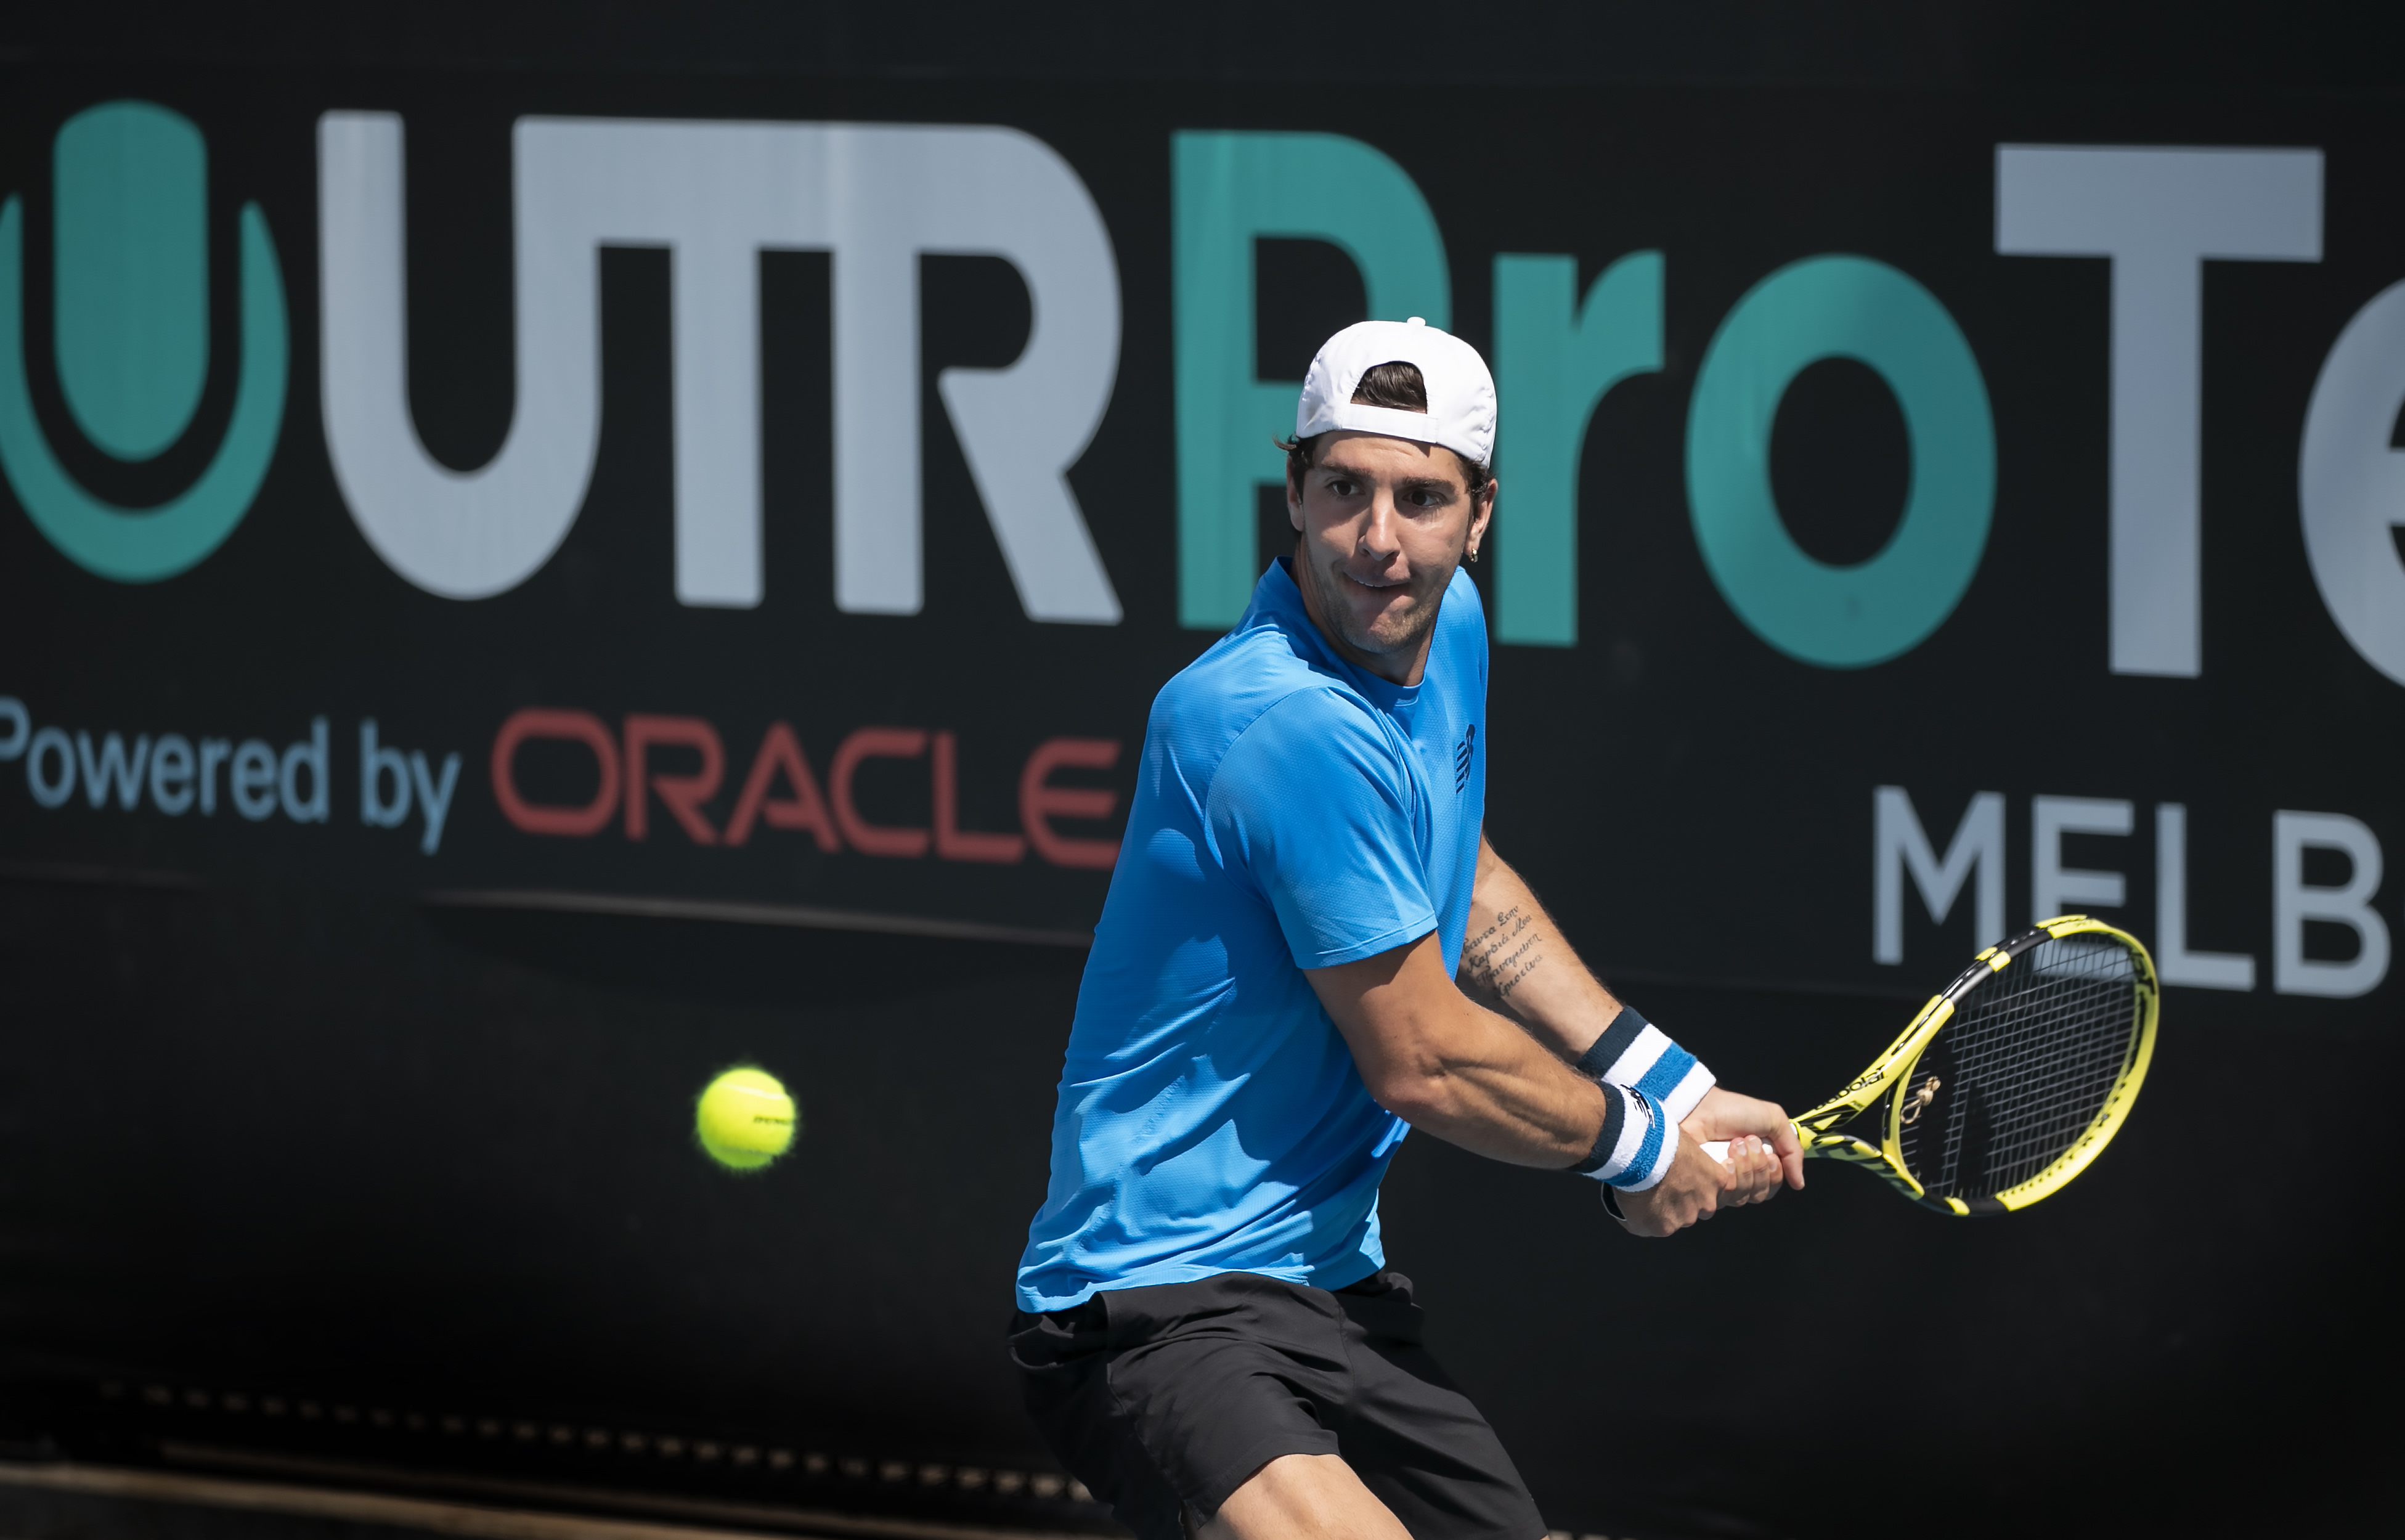 Universal Tennis launches UTR Pro Tennis Series Tour